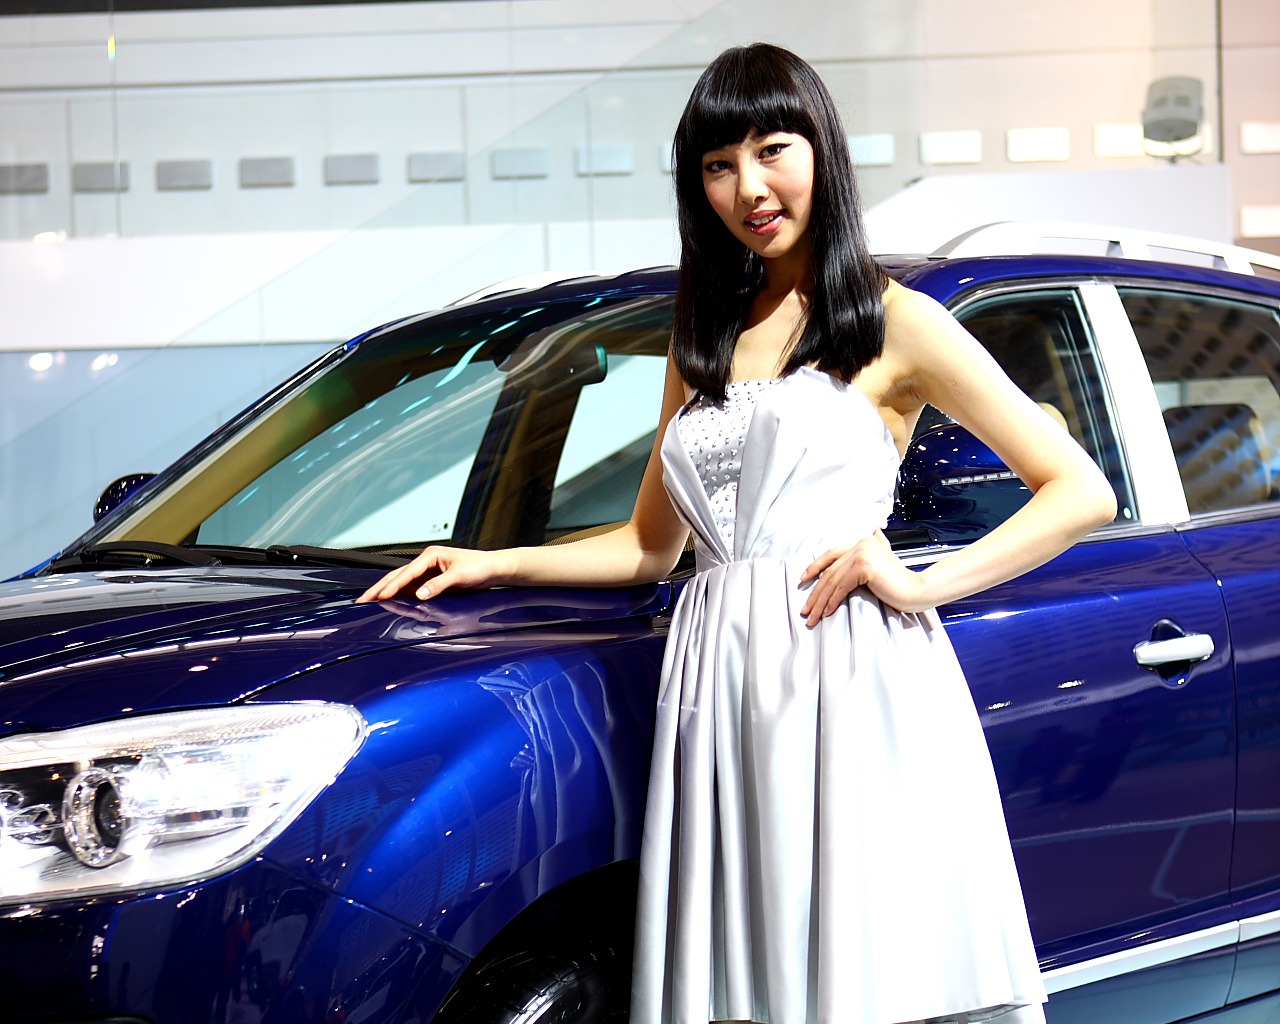 Peking Auto Show (a daleko práce) #5 - 1280x1024